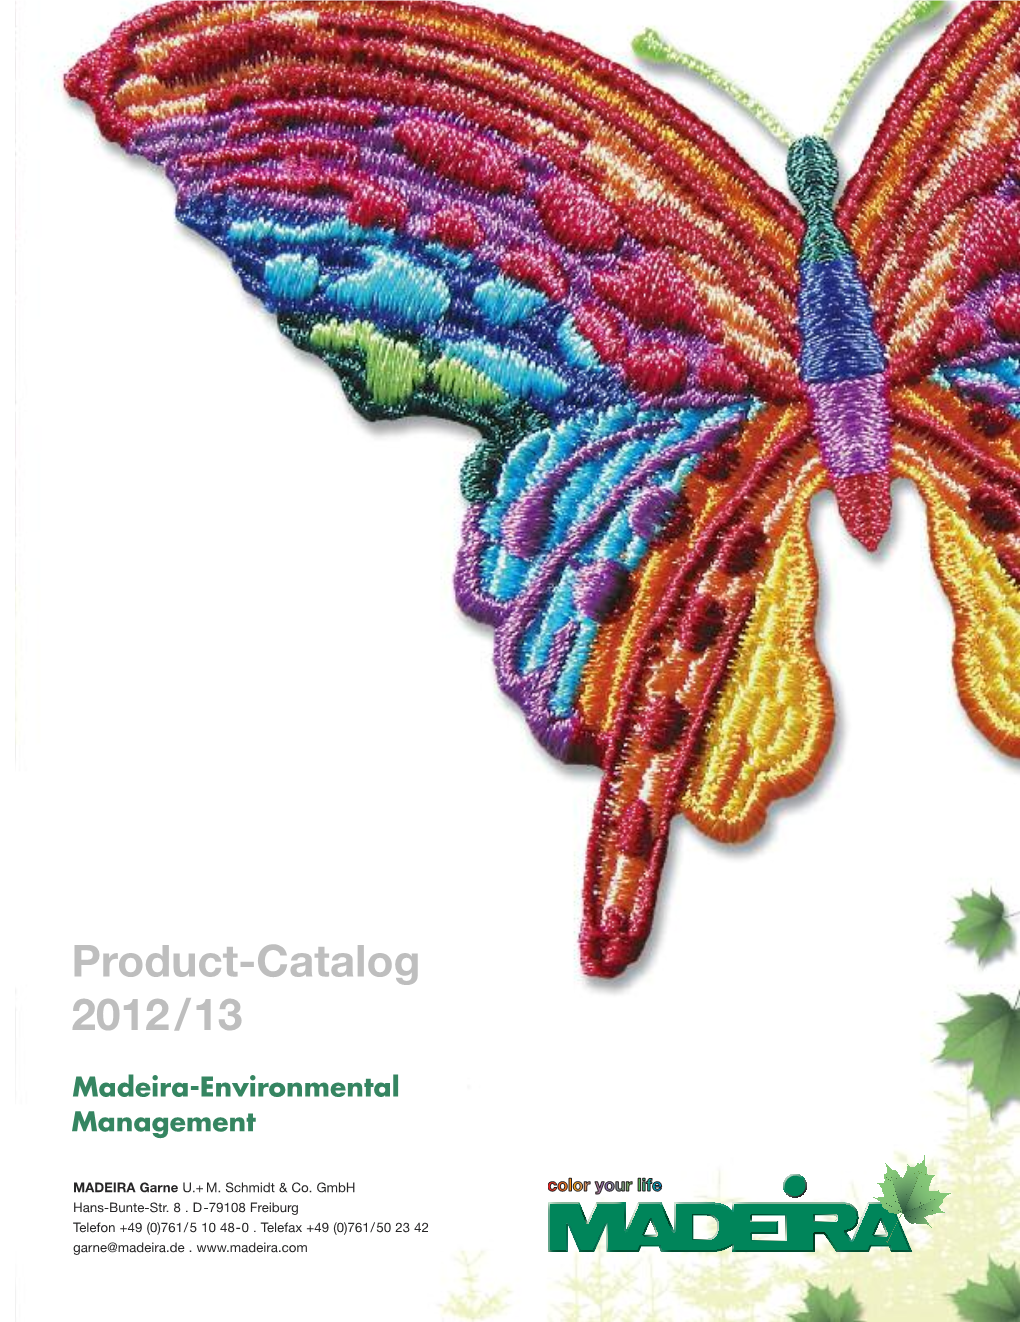 Product-Catalog 2012/13